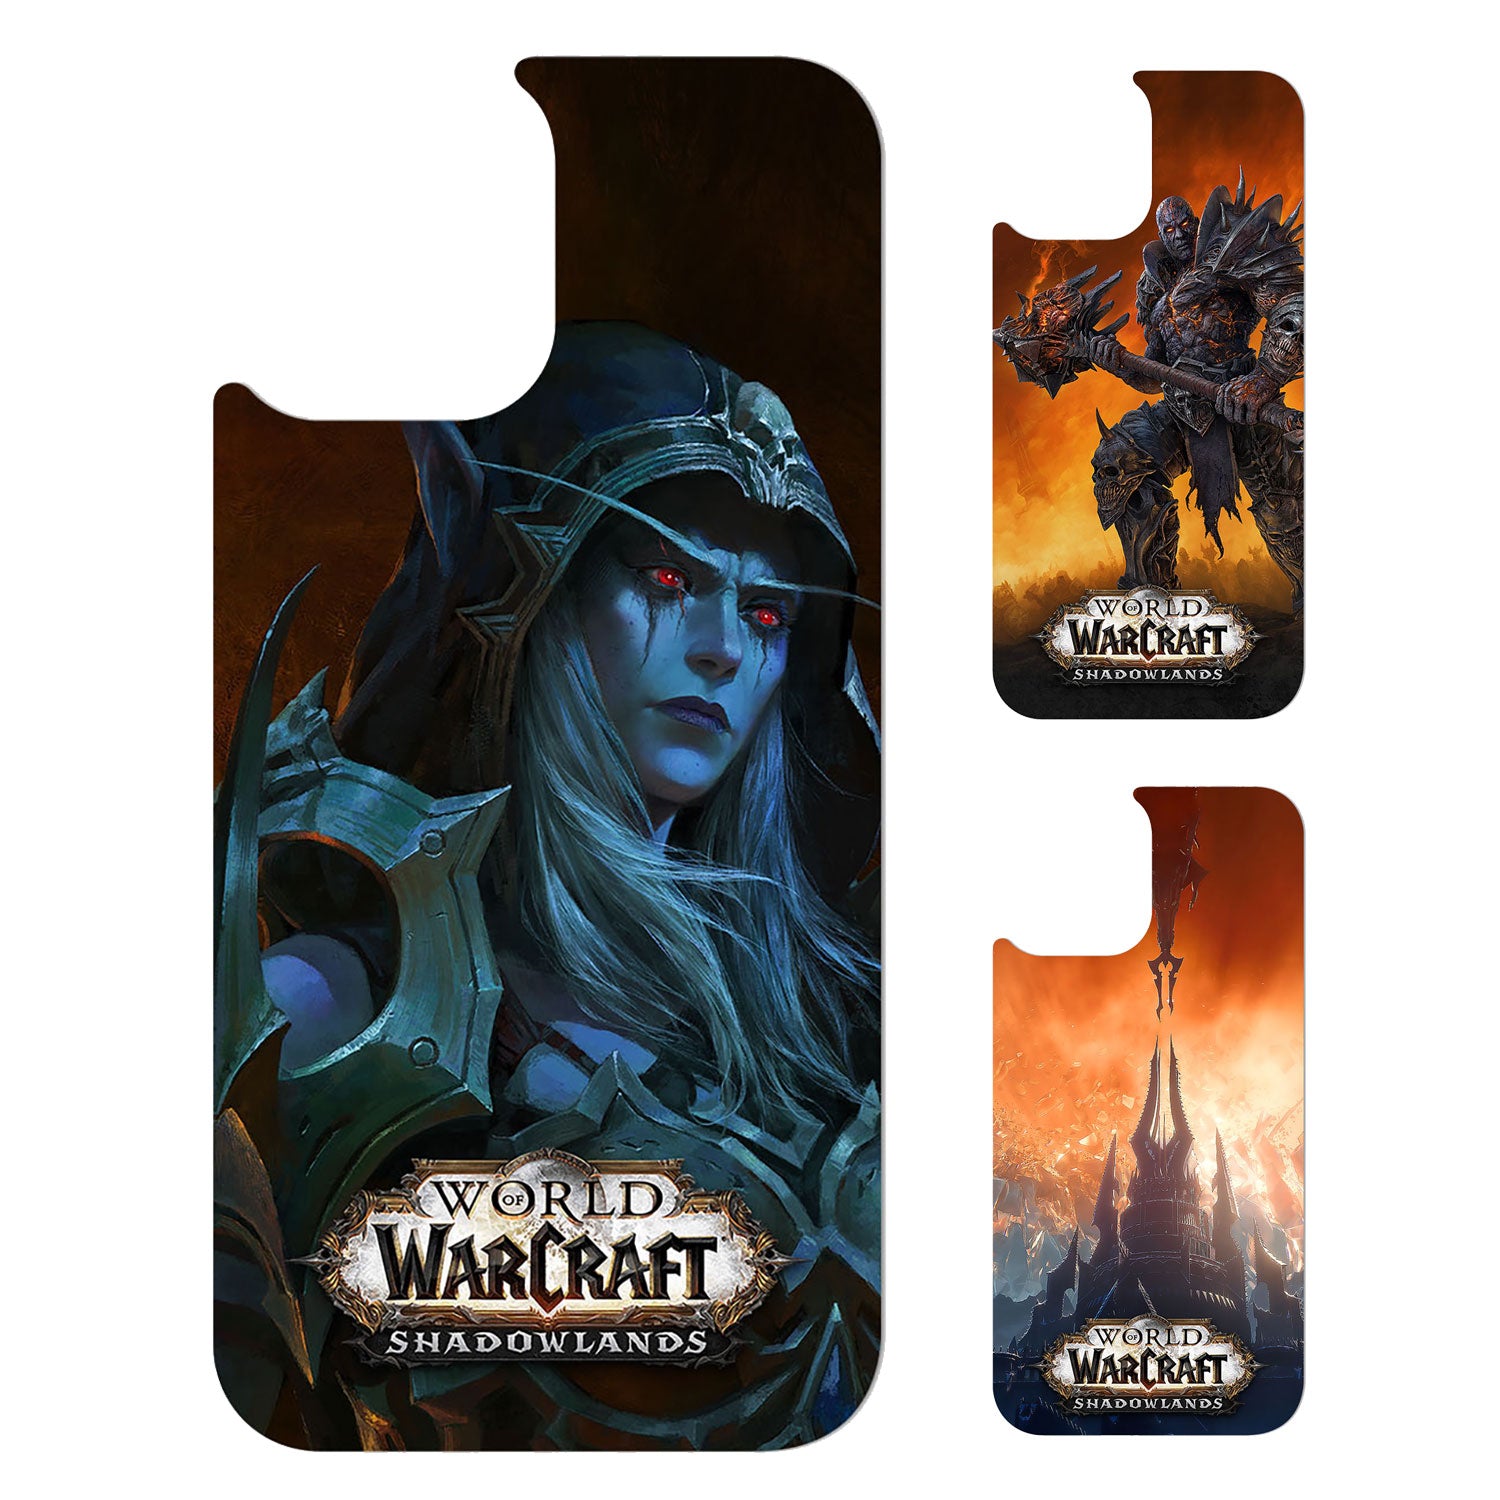 World of Warcraft Shadowlands V2 InfiniteSwap Phone Cover Pack - Main Image